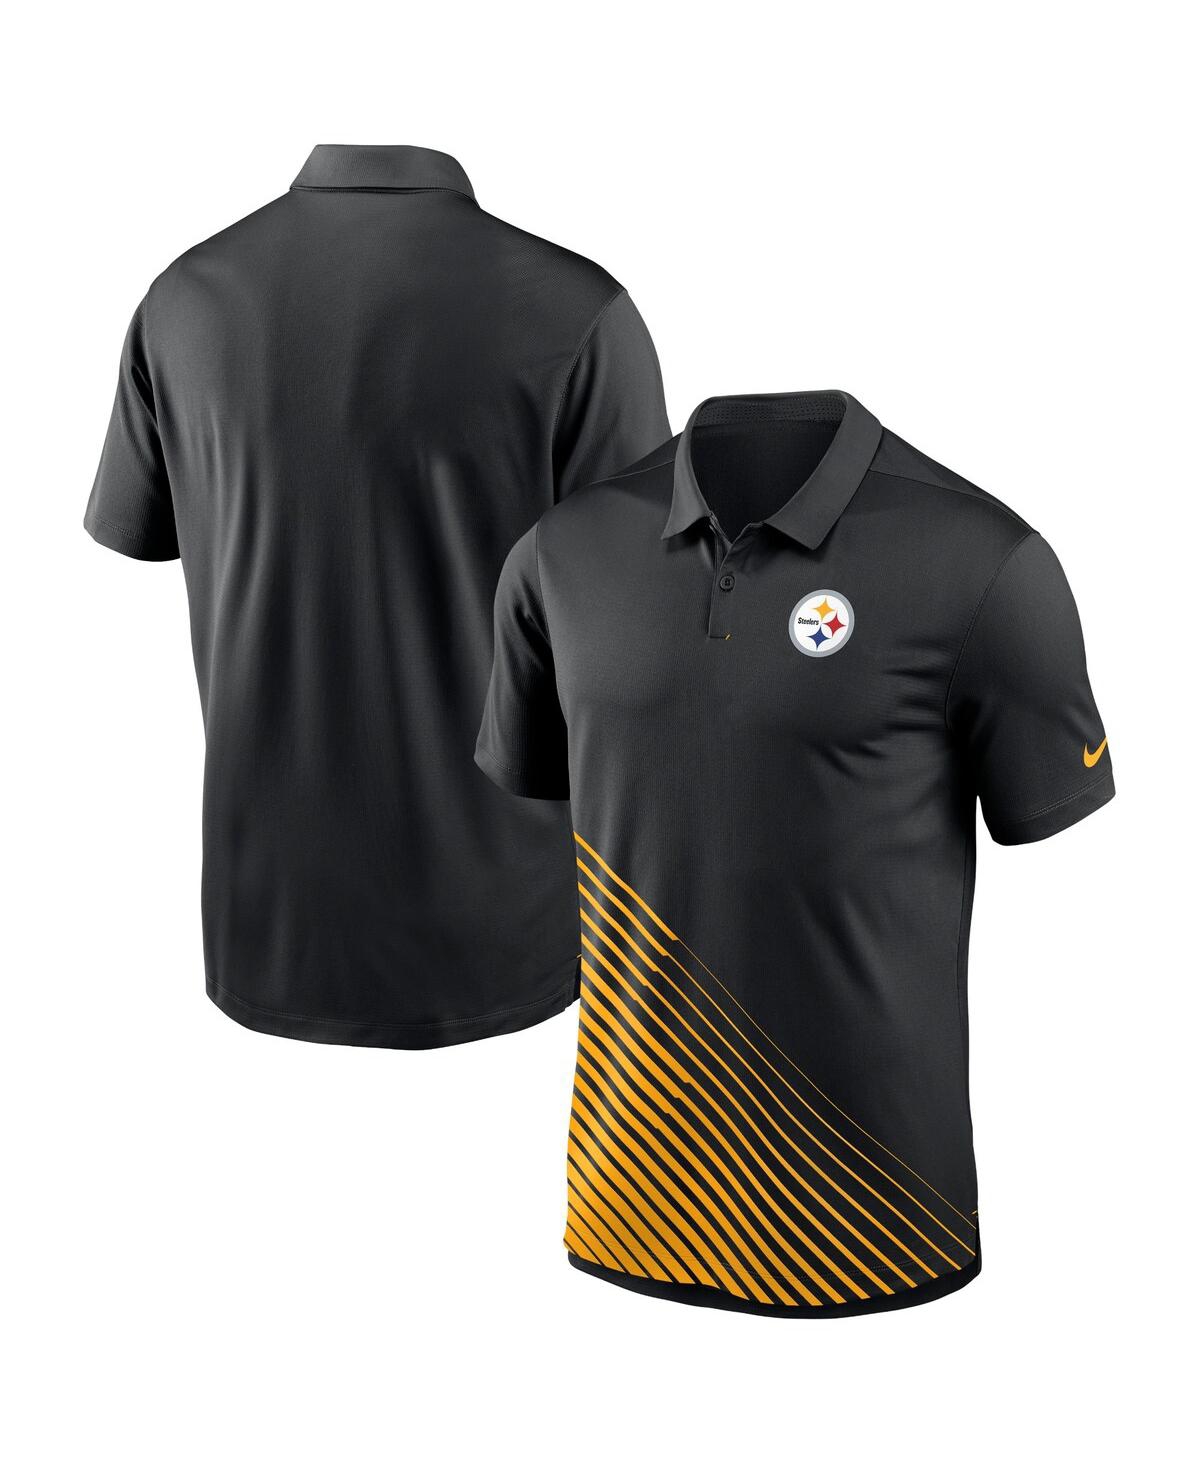 Men's Nike Black Pittsburgh Steelers Vapor Performance Polo Shirt - Black